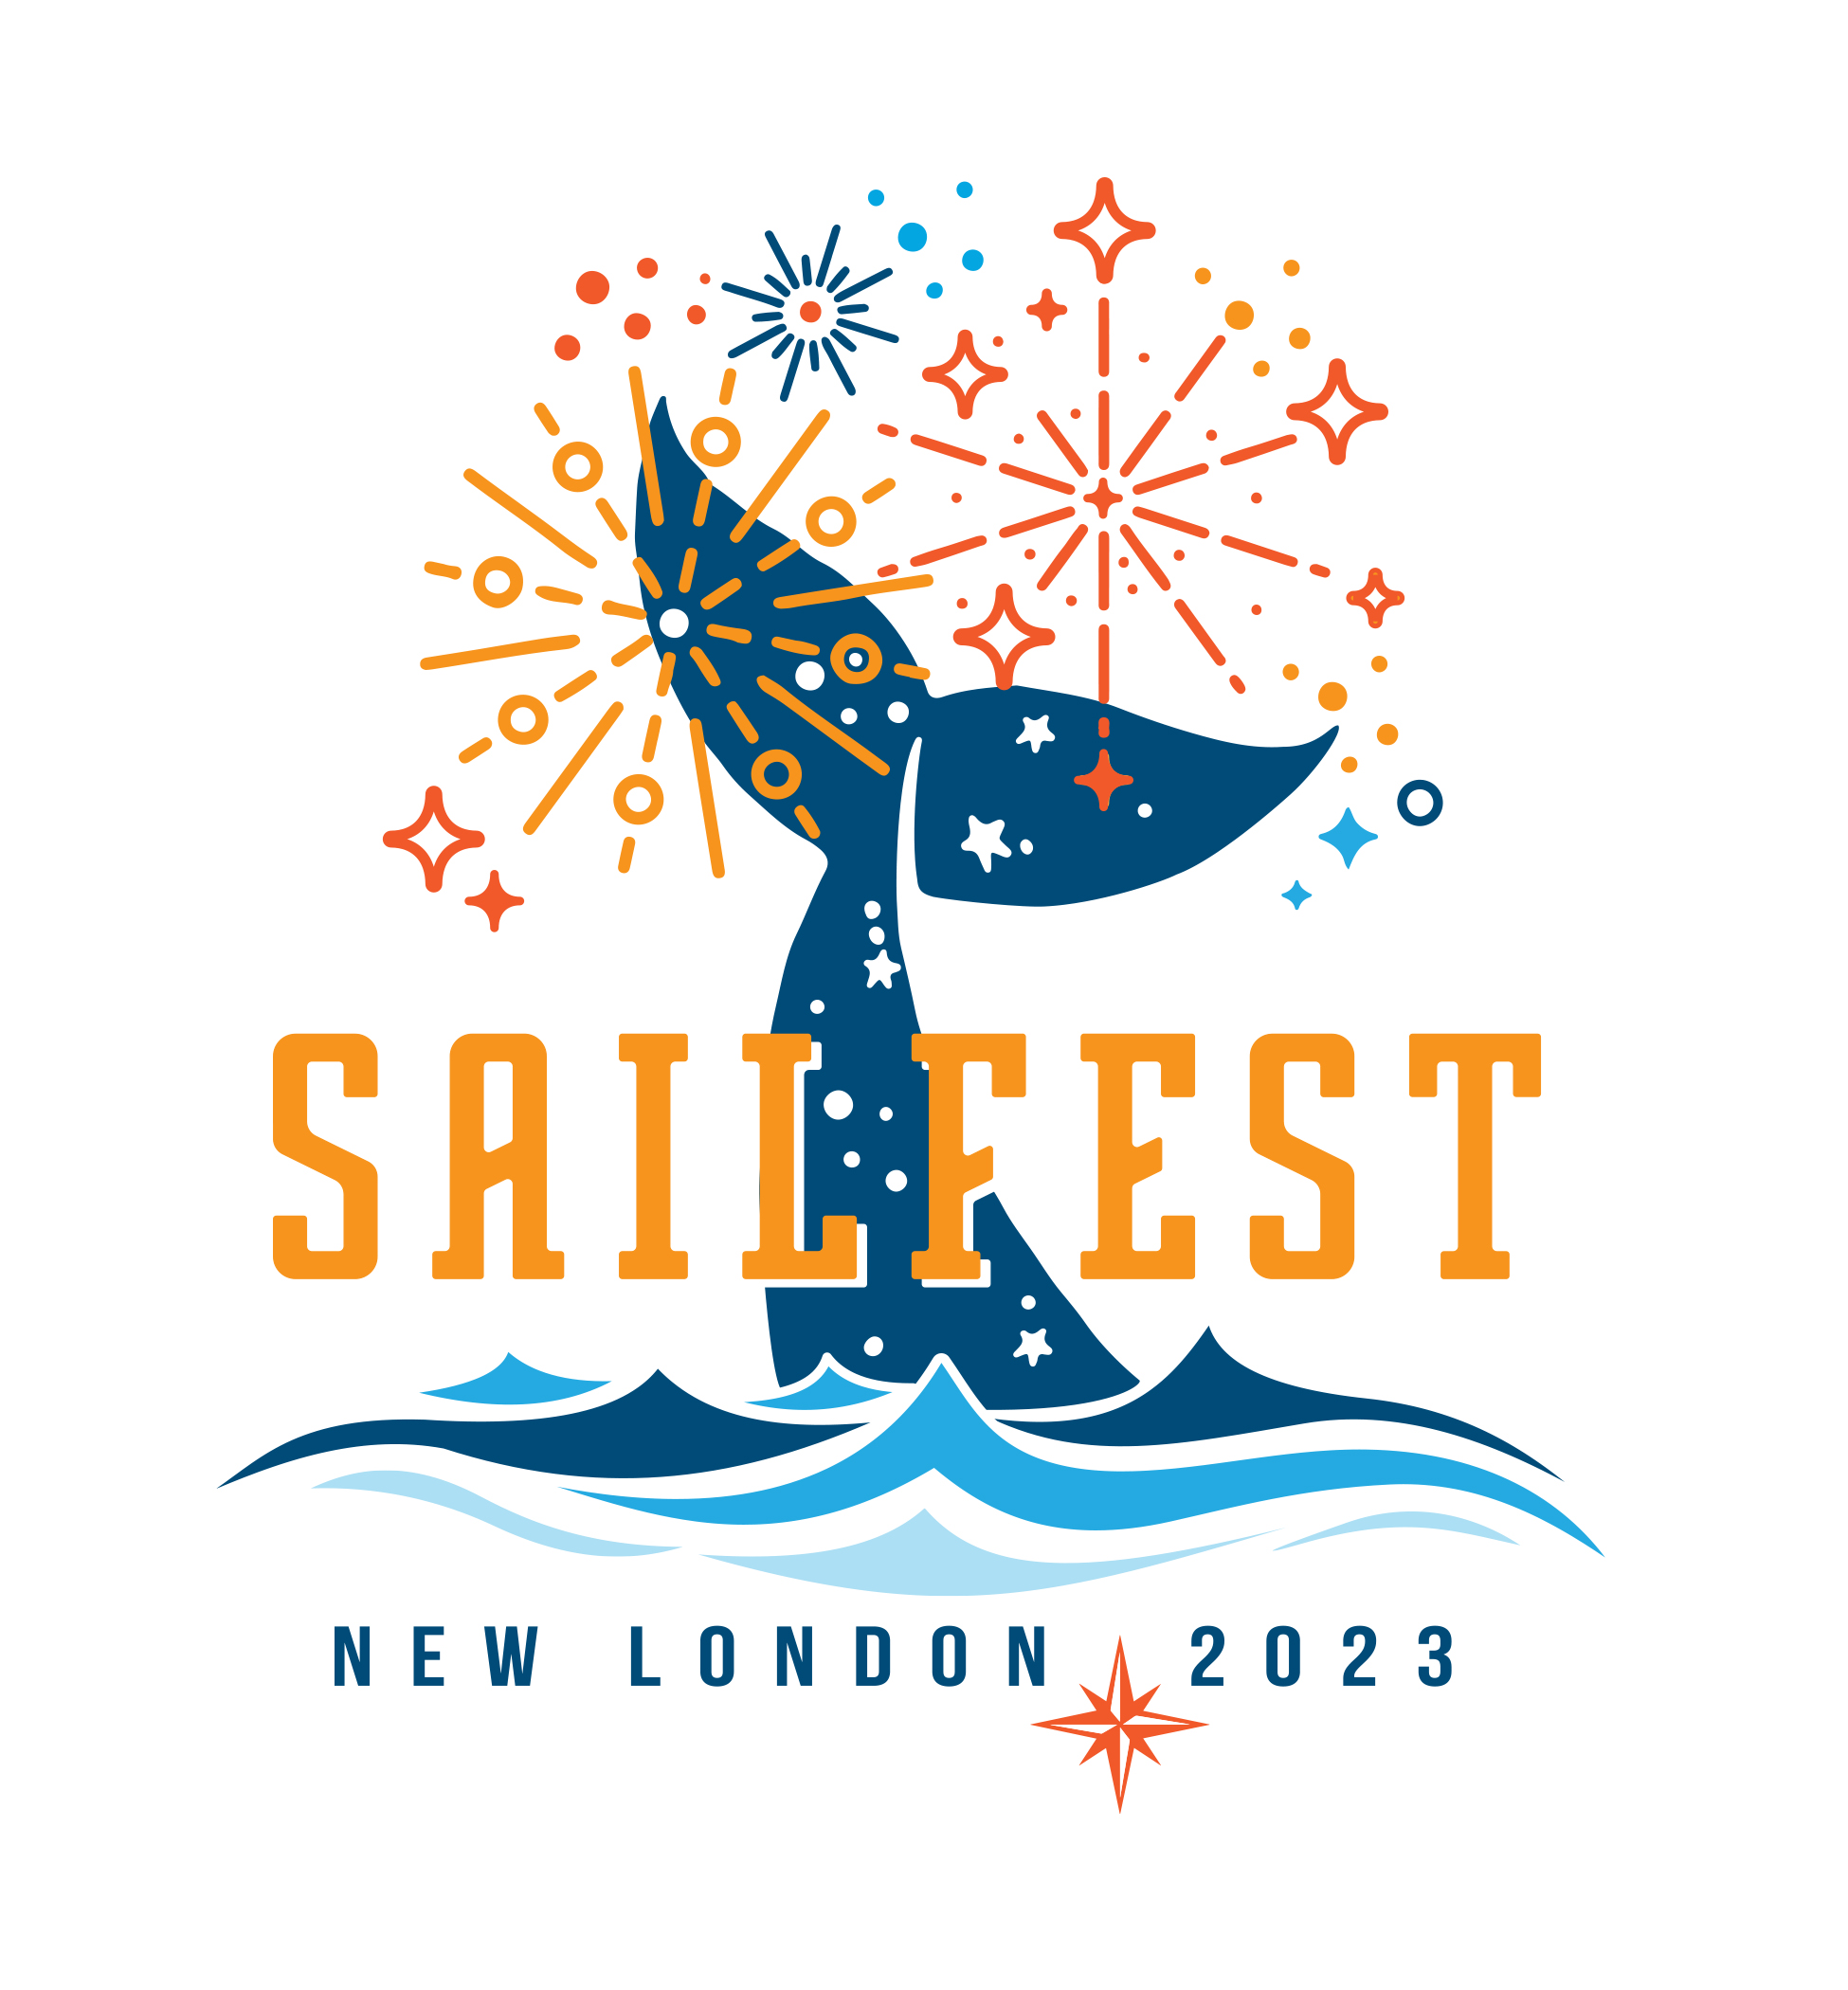 Sailfest July 89, 2023 Downtown New London Association